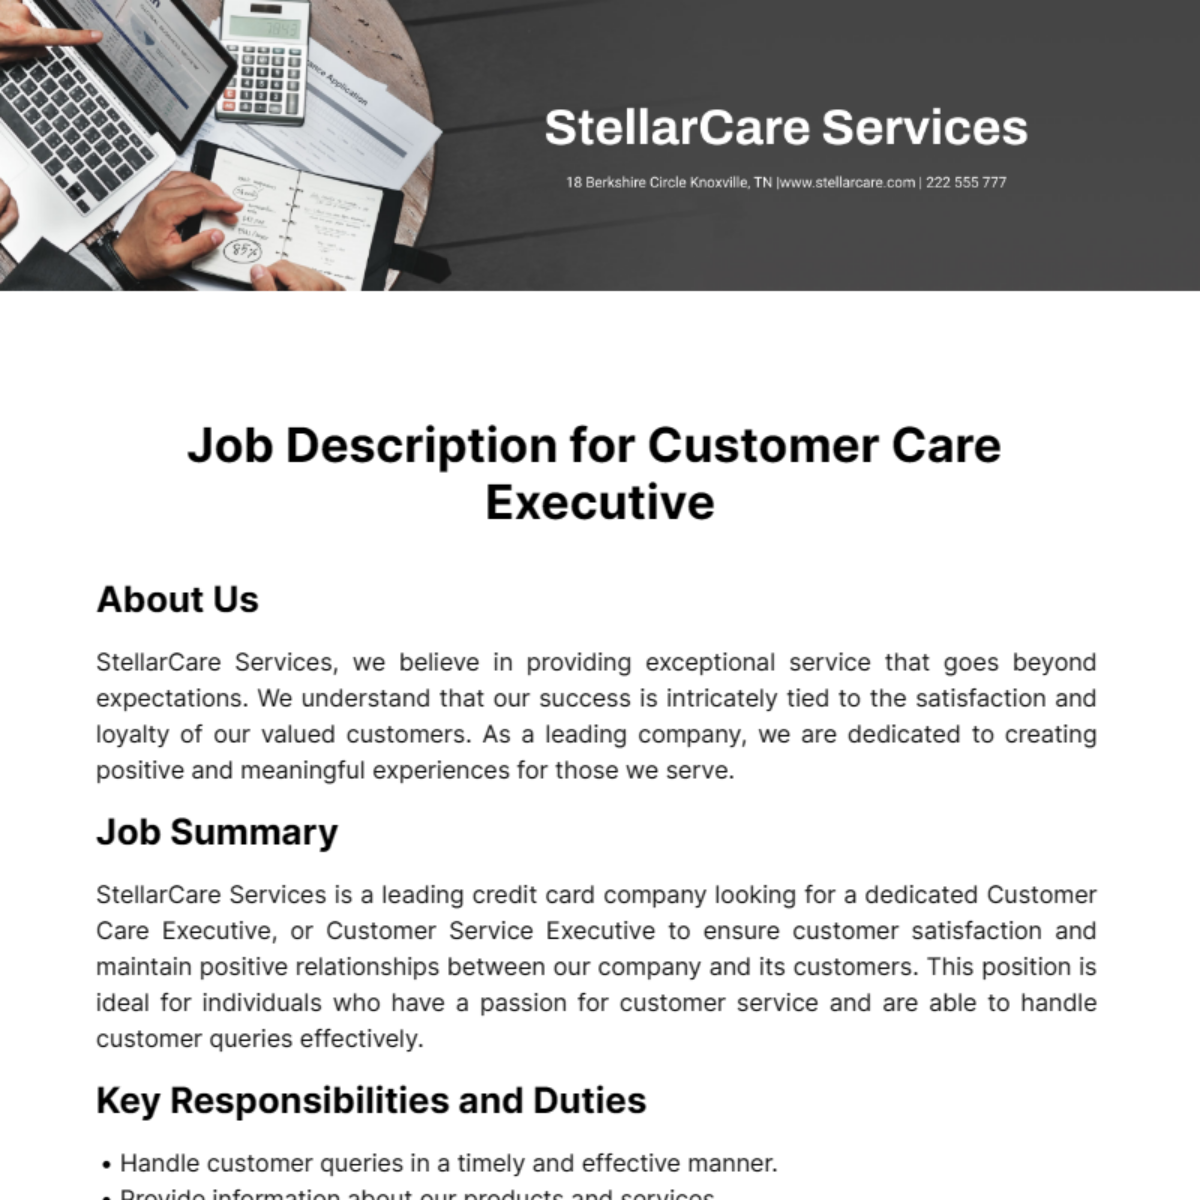 Job Description for Customer Care Executive Template